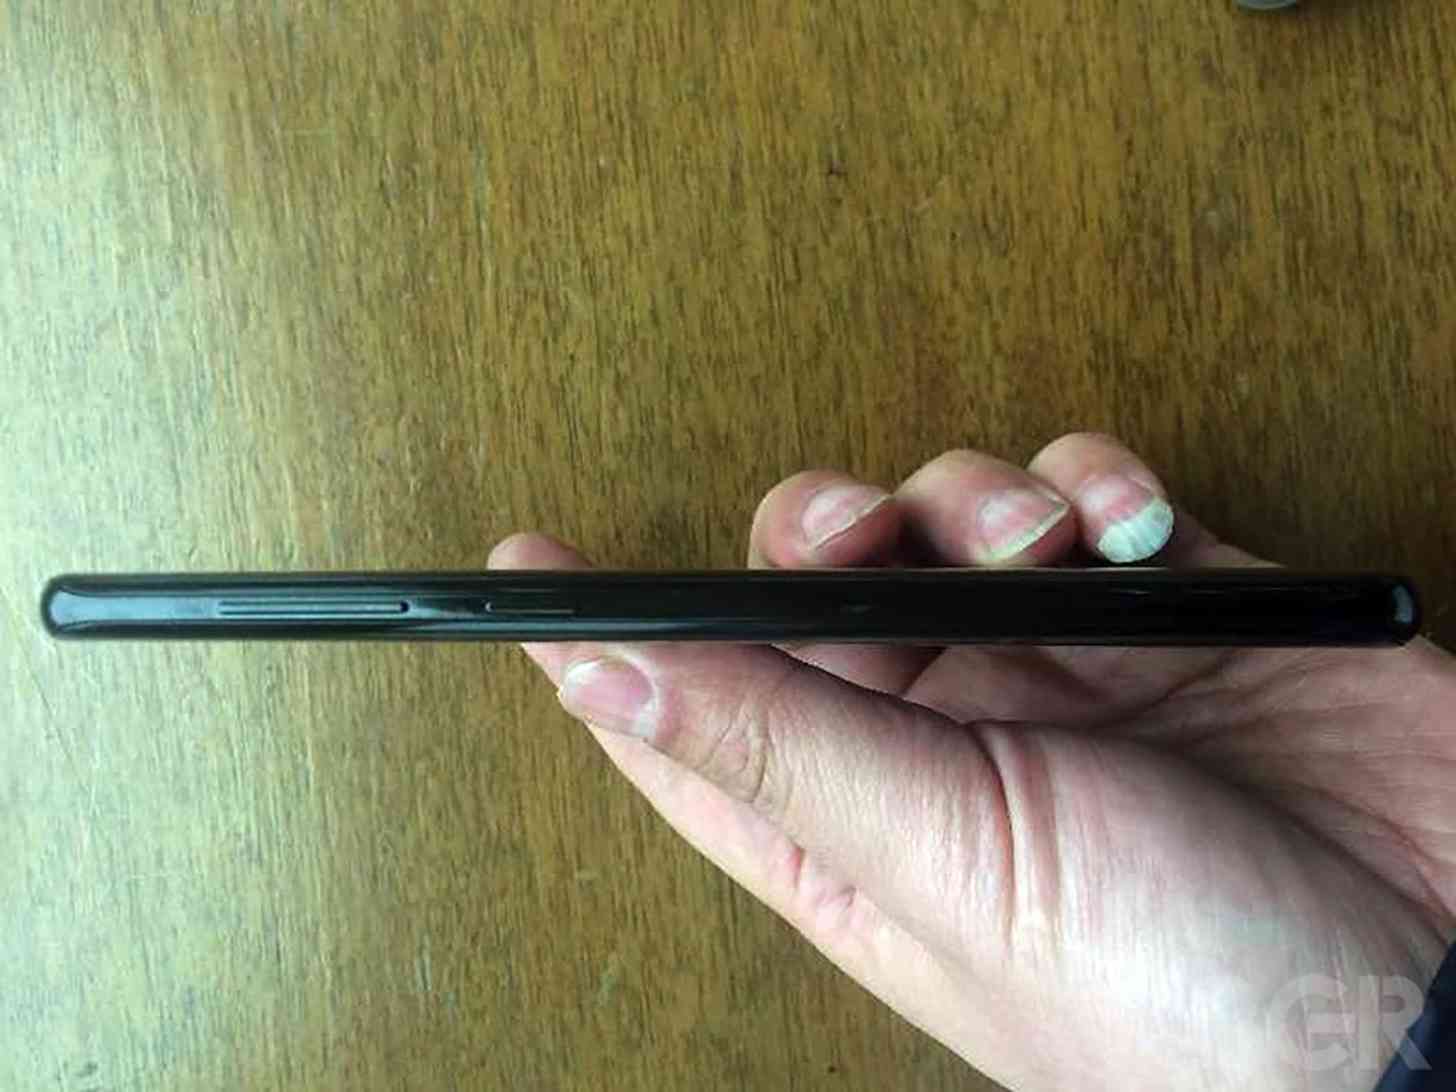 Samsung Galaxy S8 photo leak side